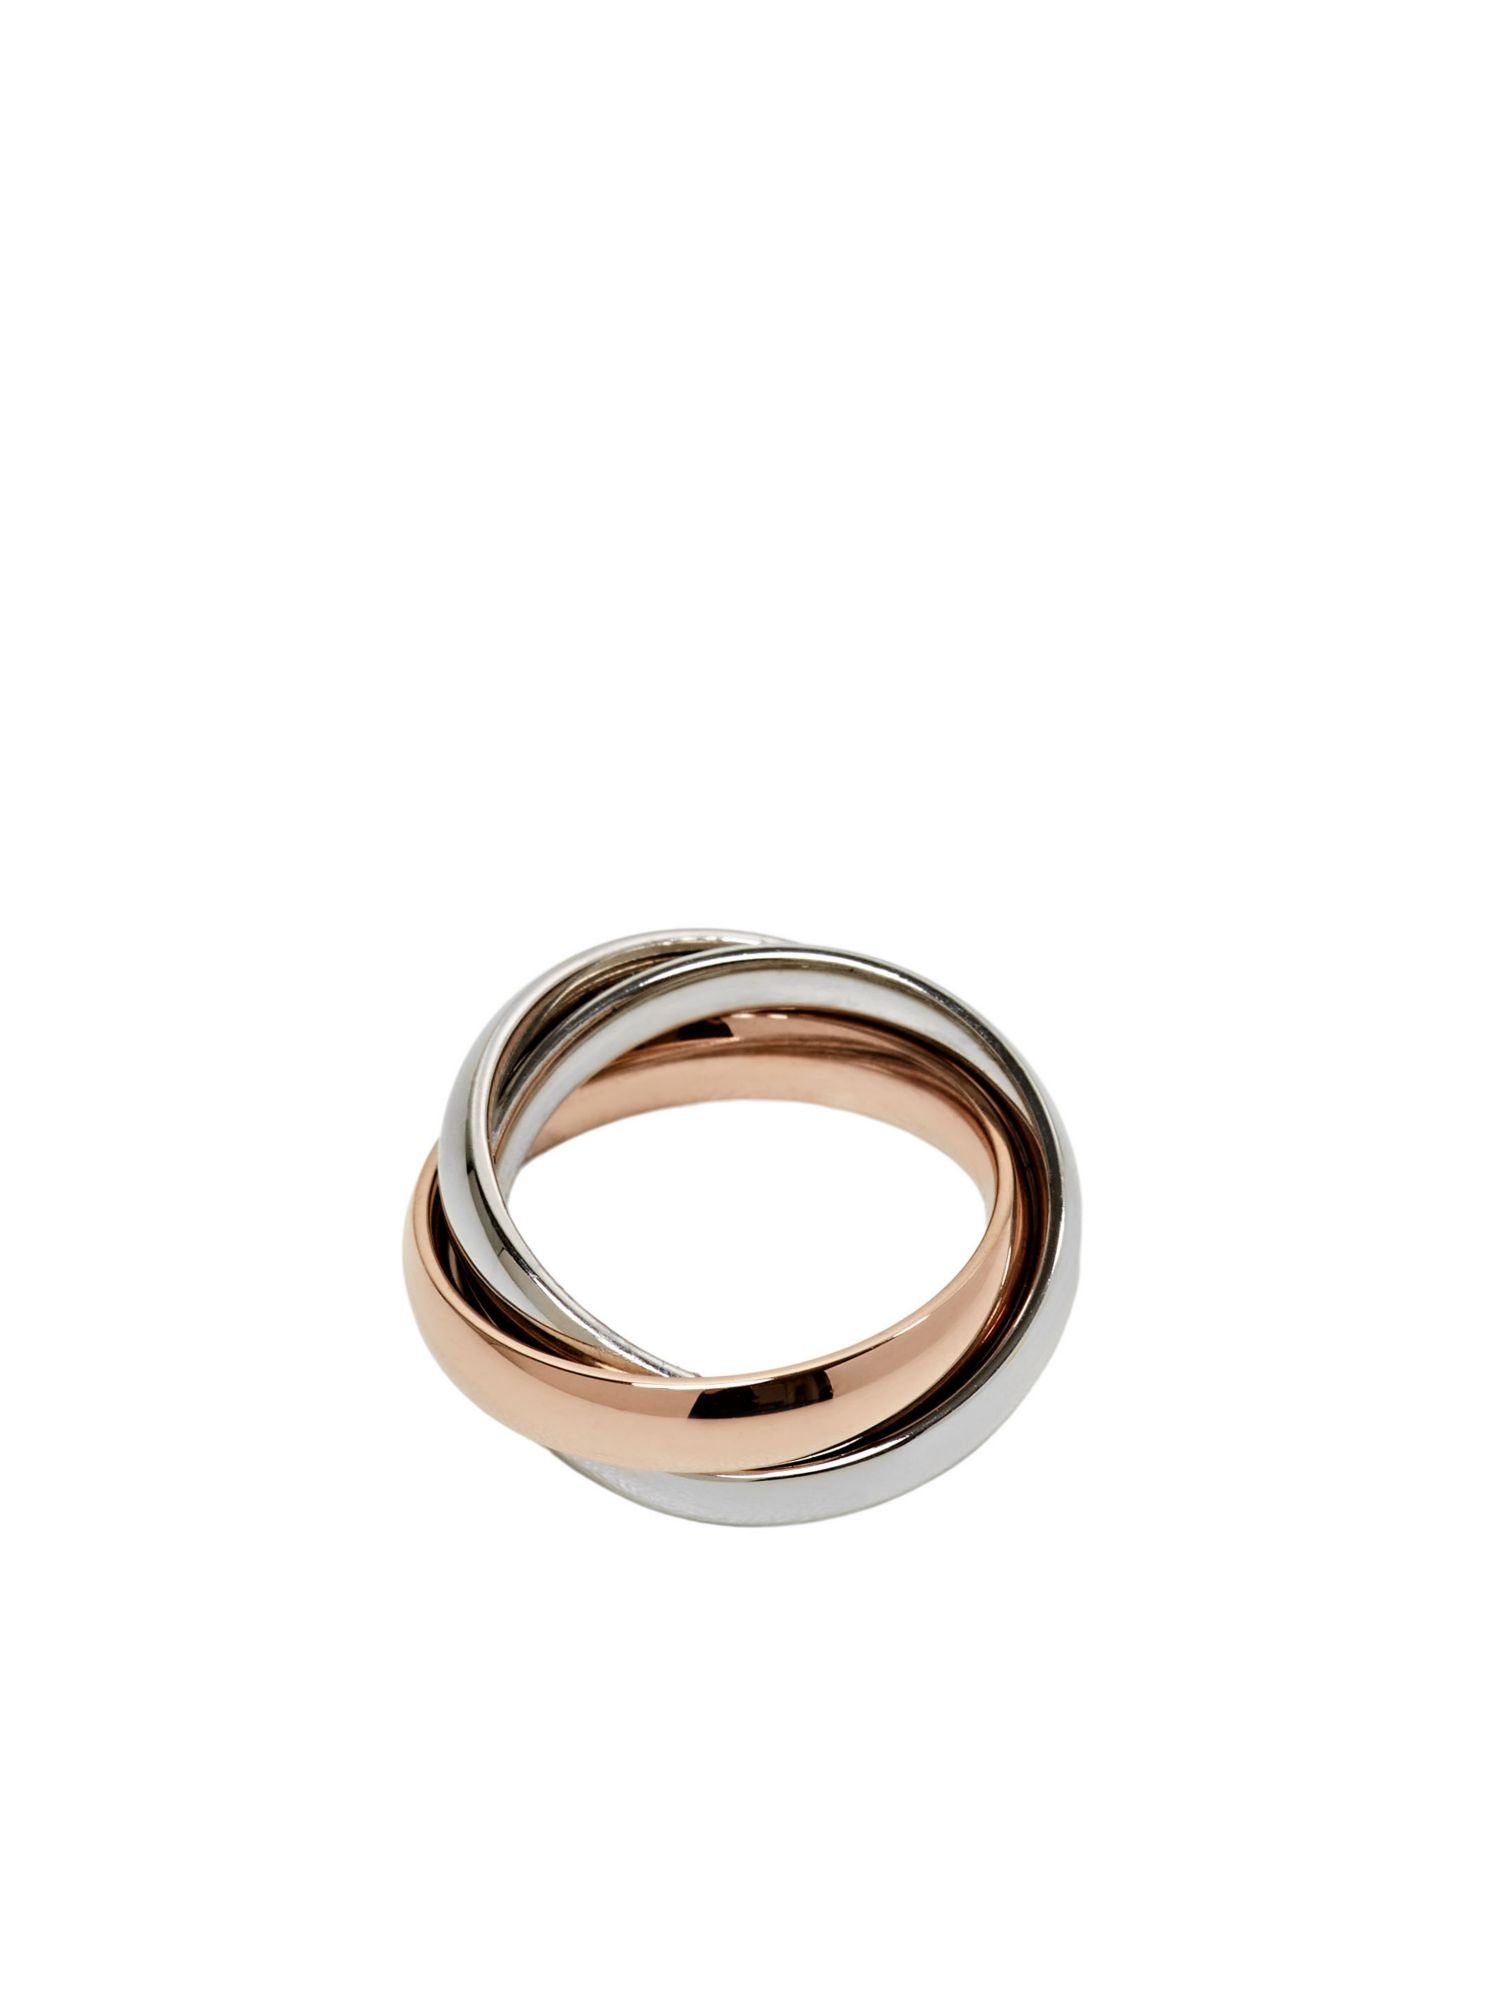 Esprit Silberring Trio-Ring aus Edelstahl roségold, silber